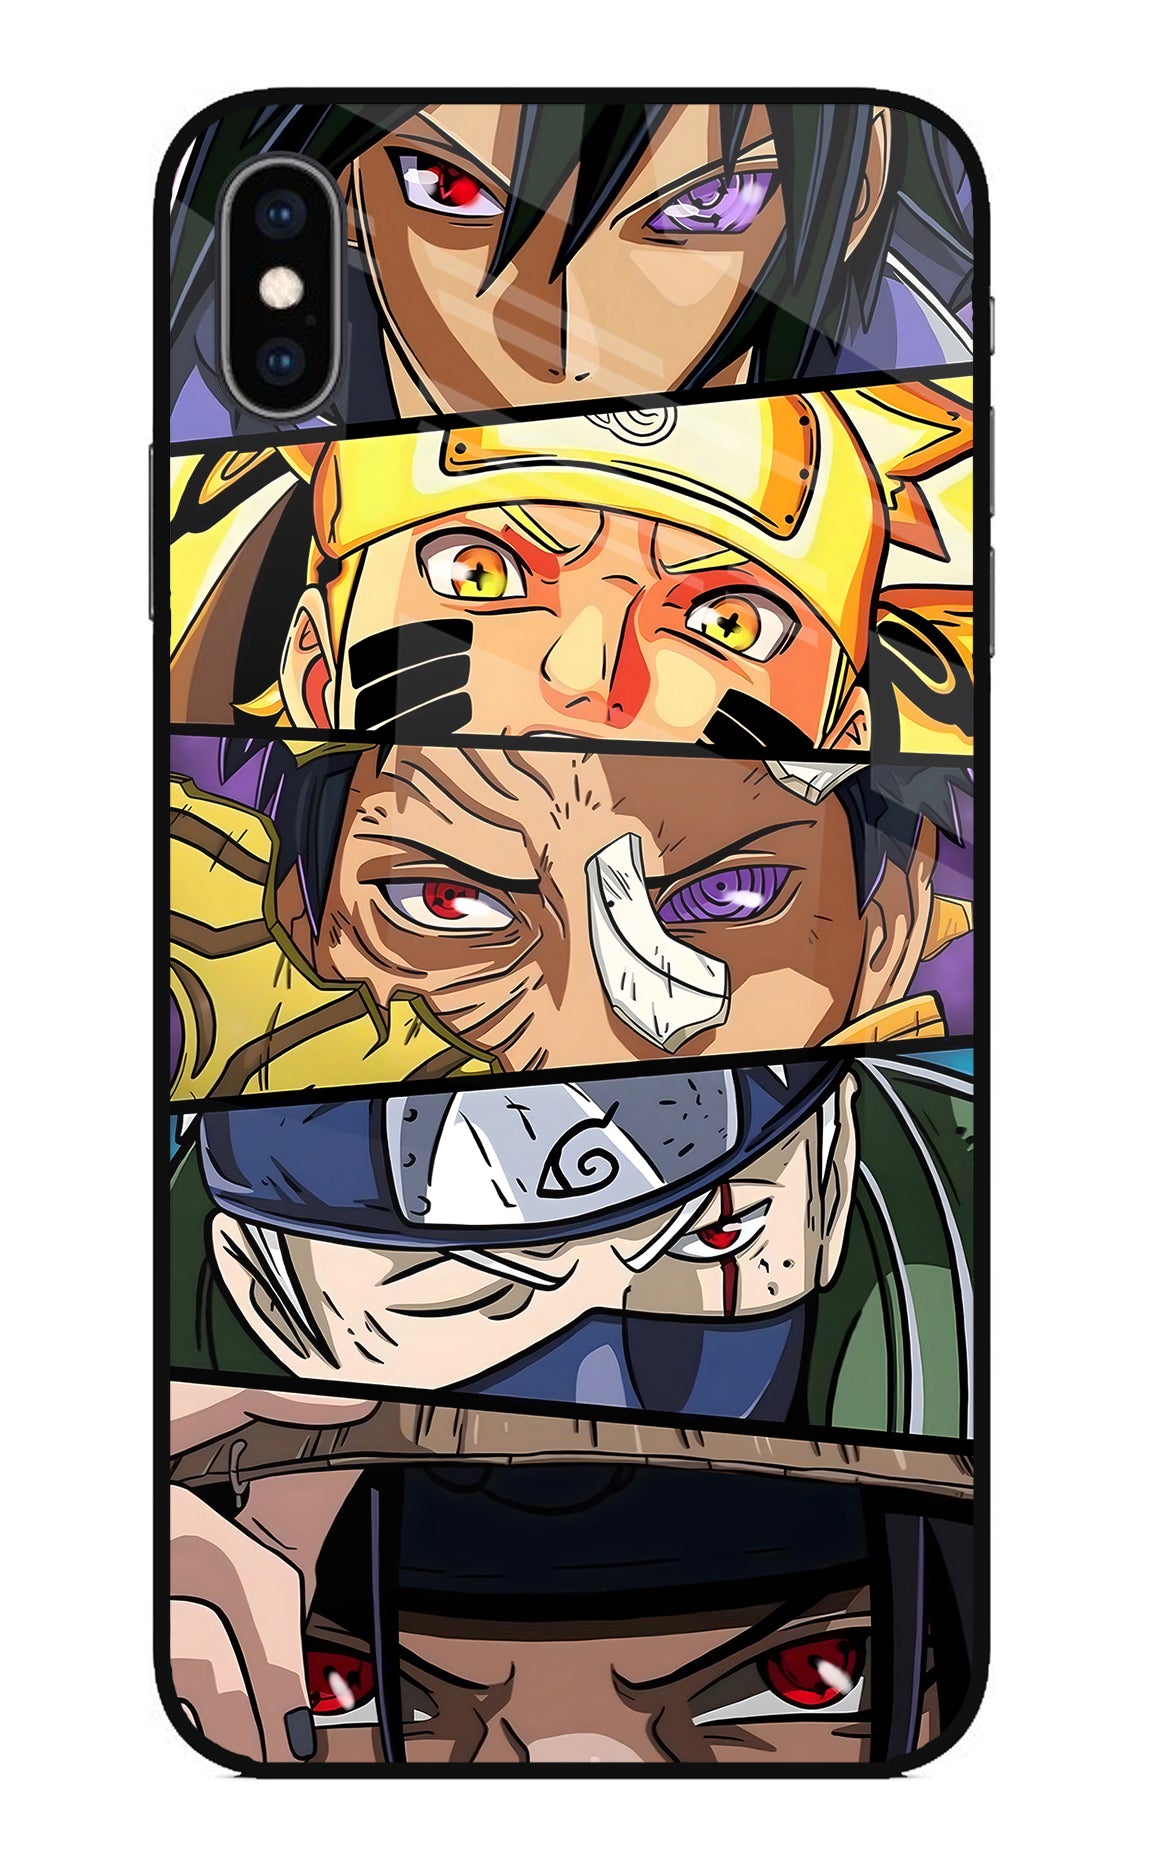 Naruto Character iPhone XS Max Back Cover